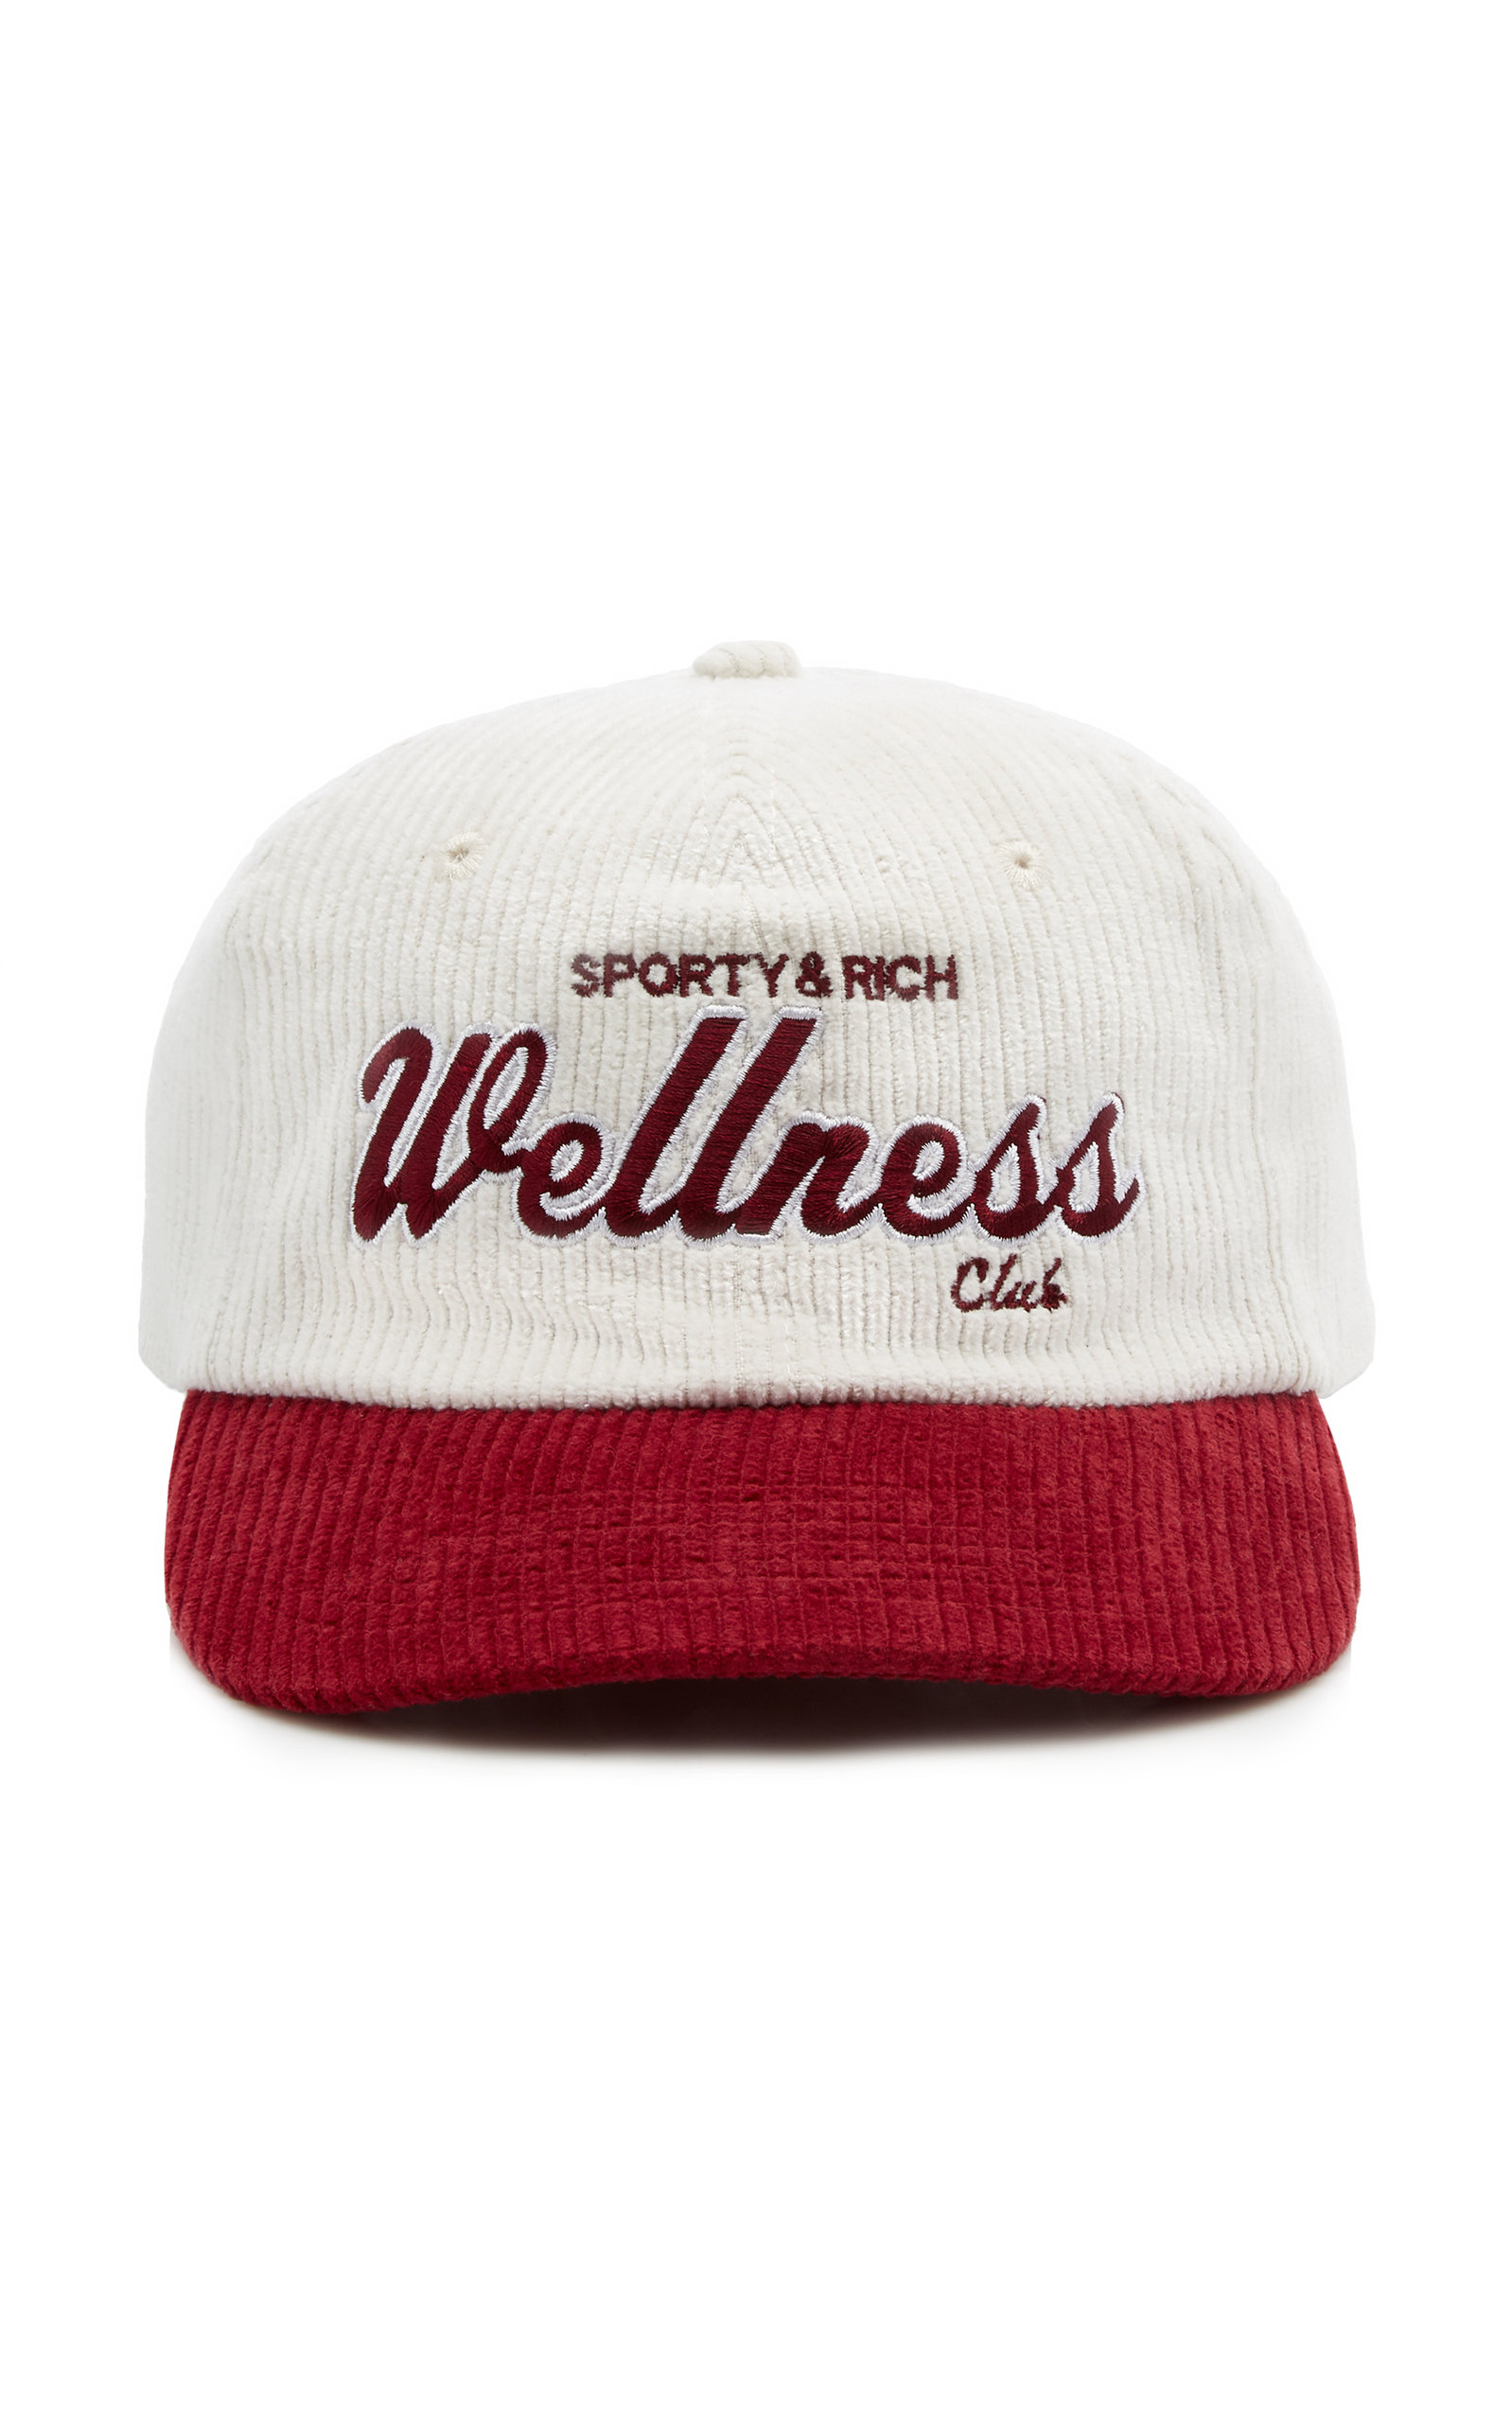 Sporty & Rich - Women's Wellness Club Cotton Corduroy Baseball Cap - White - Moda Operandi